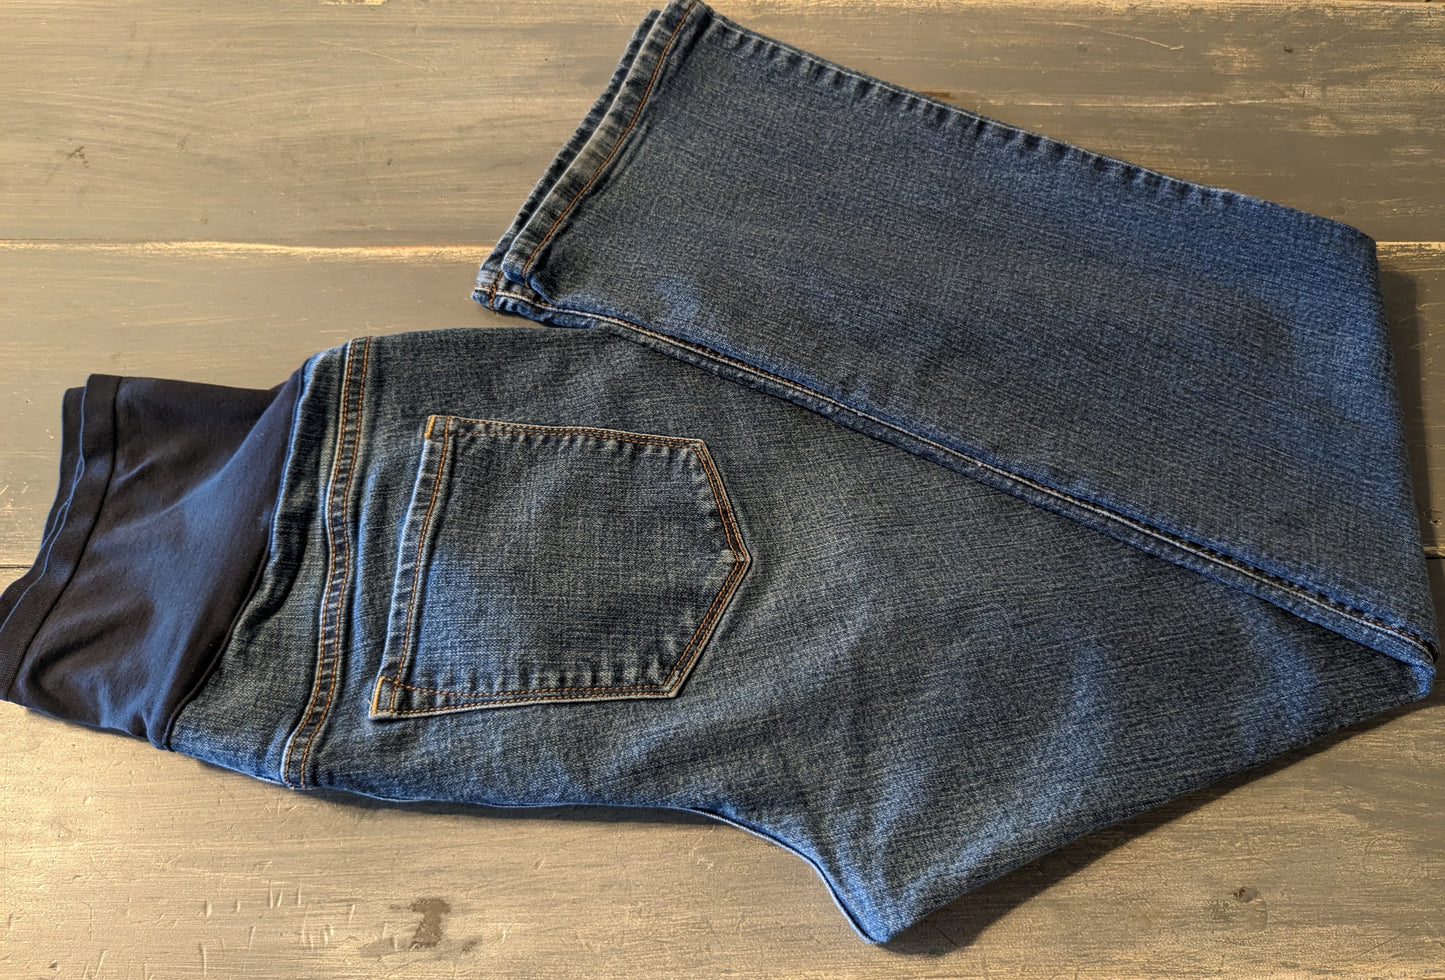 Full panel 30" bootcut jeans, Multi wash